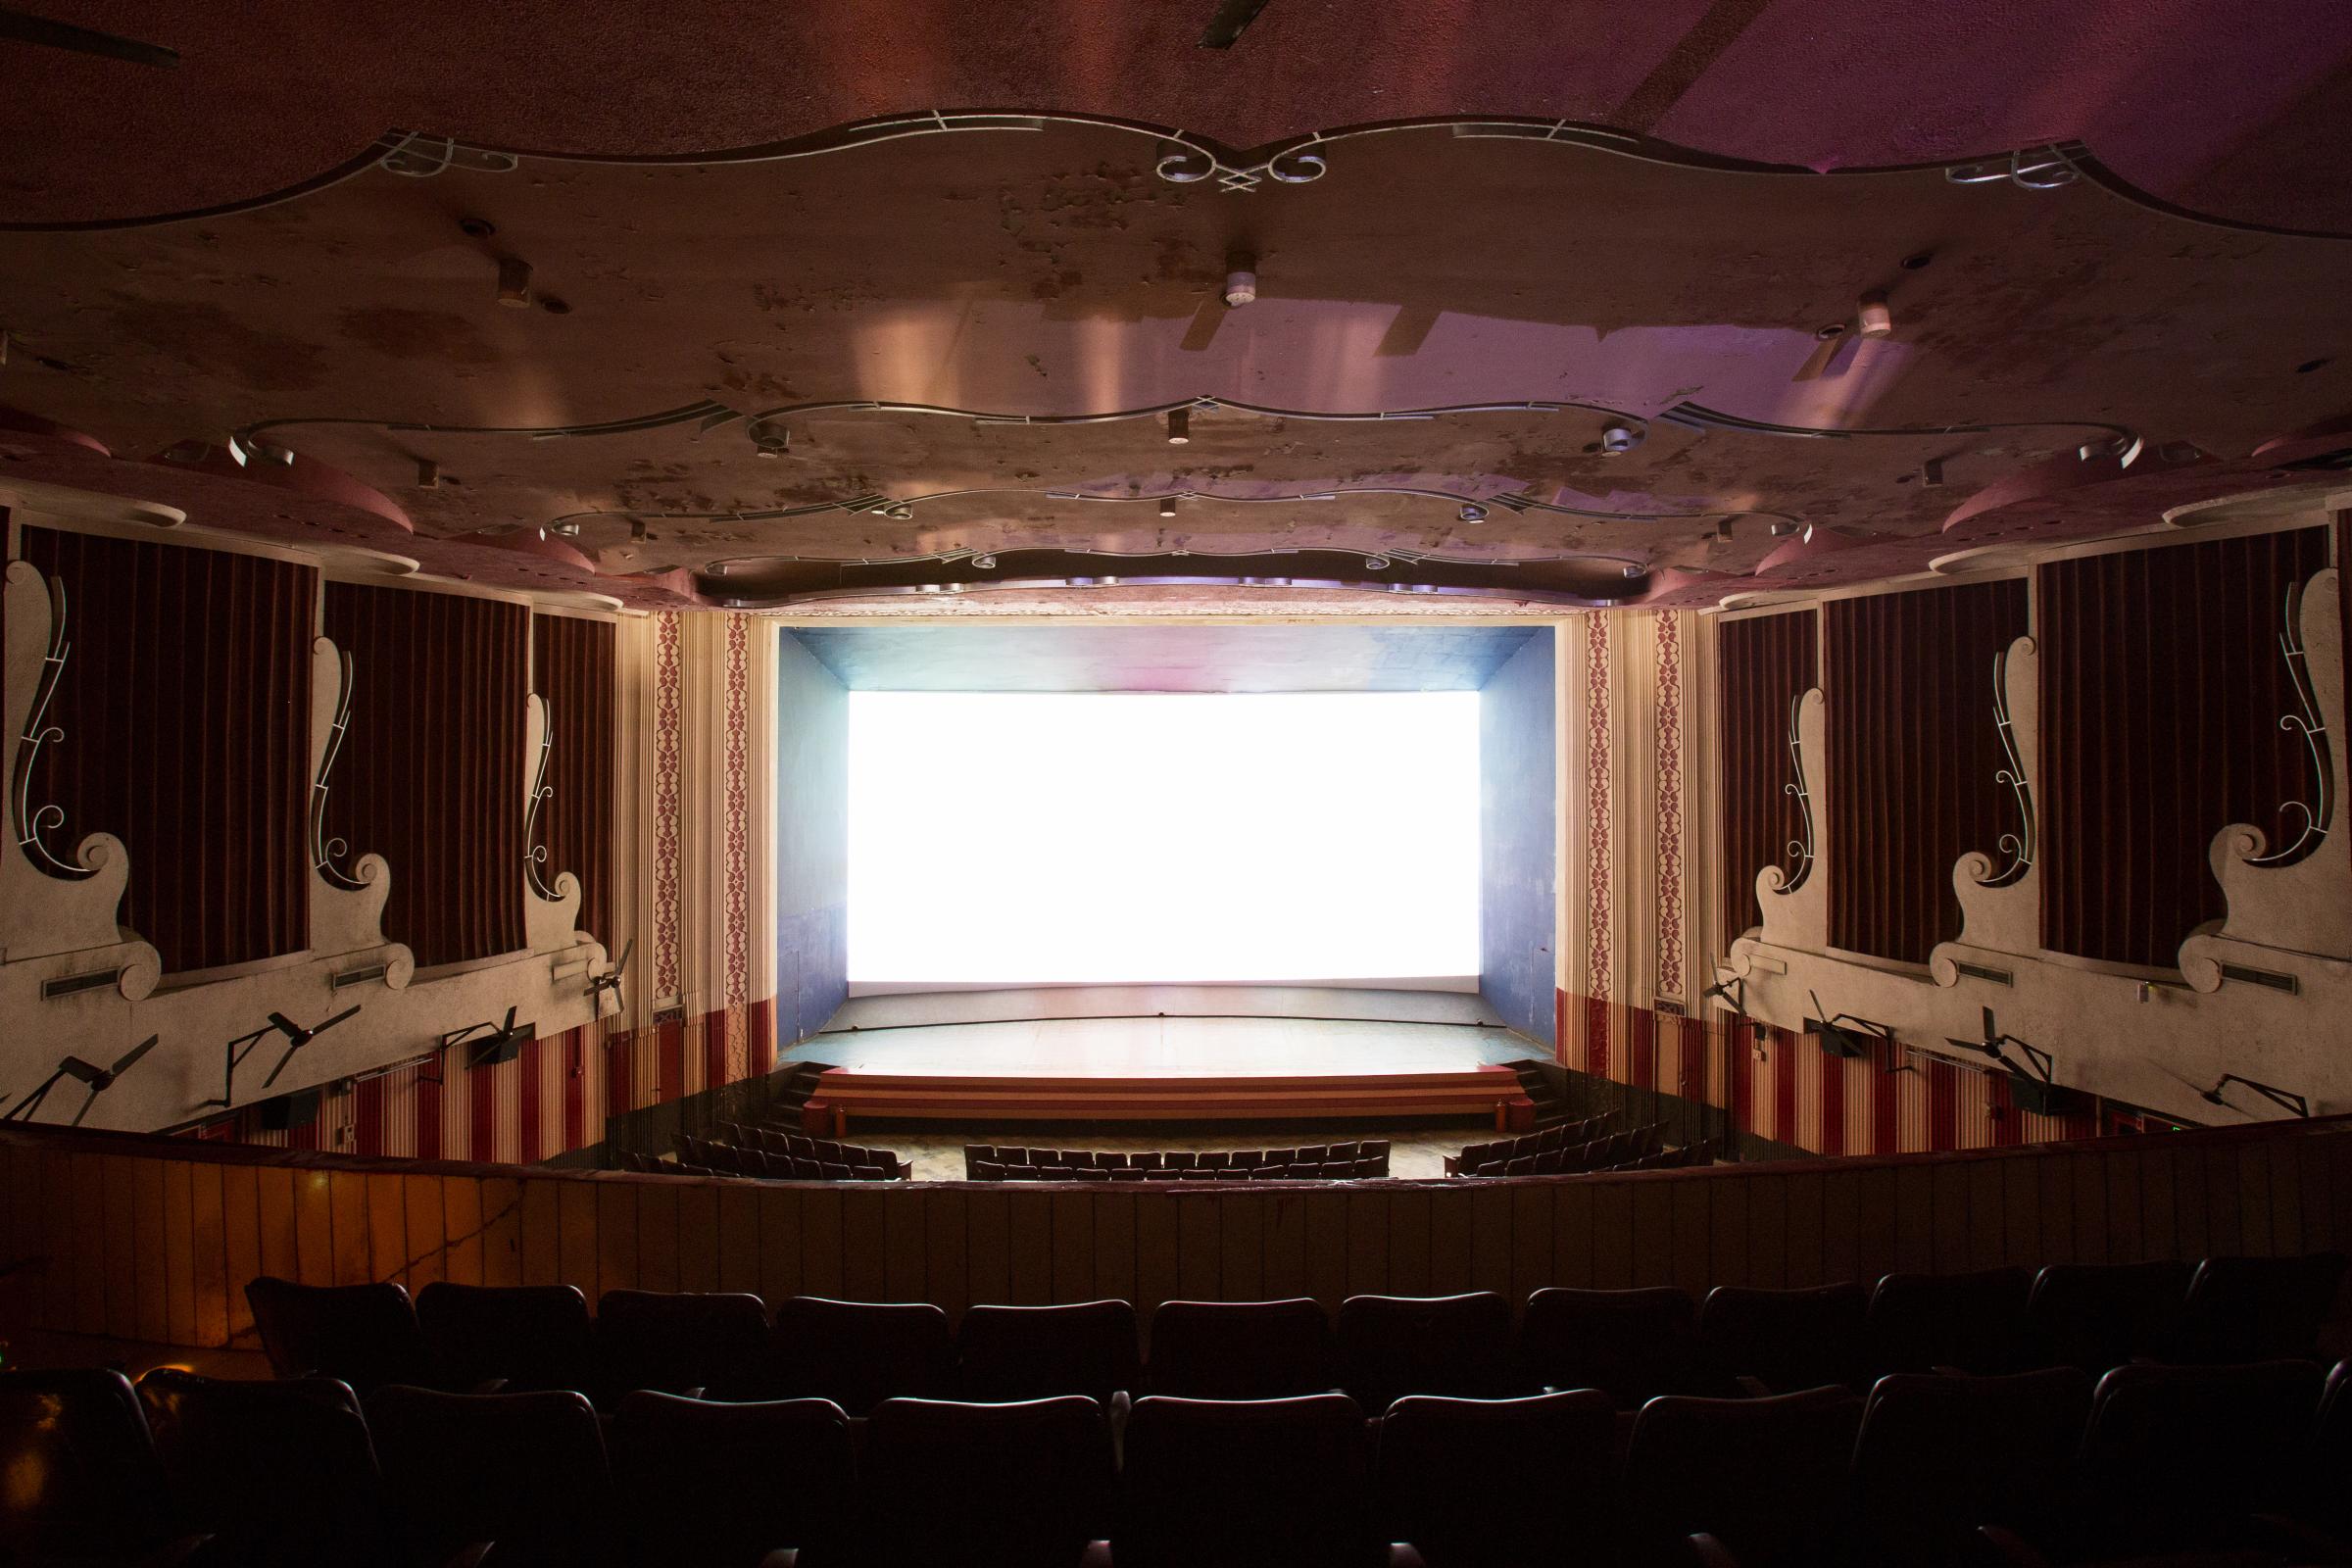 Bollywood Talkies - Maratha Mandir, one of the most famous cinema theatre,...